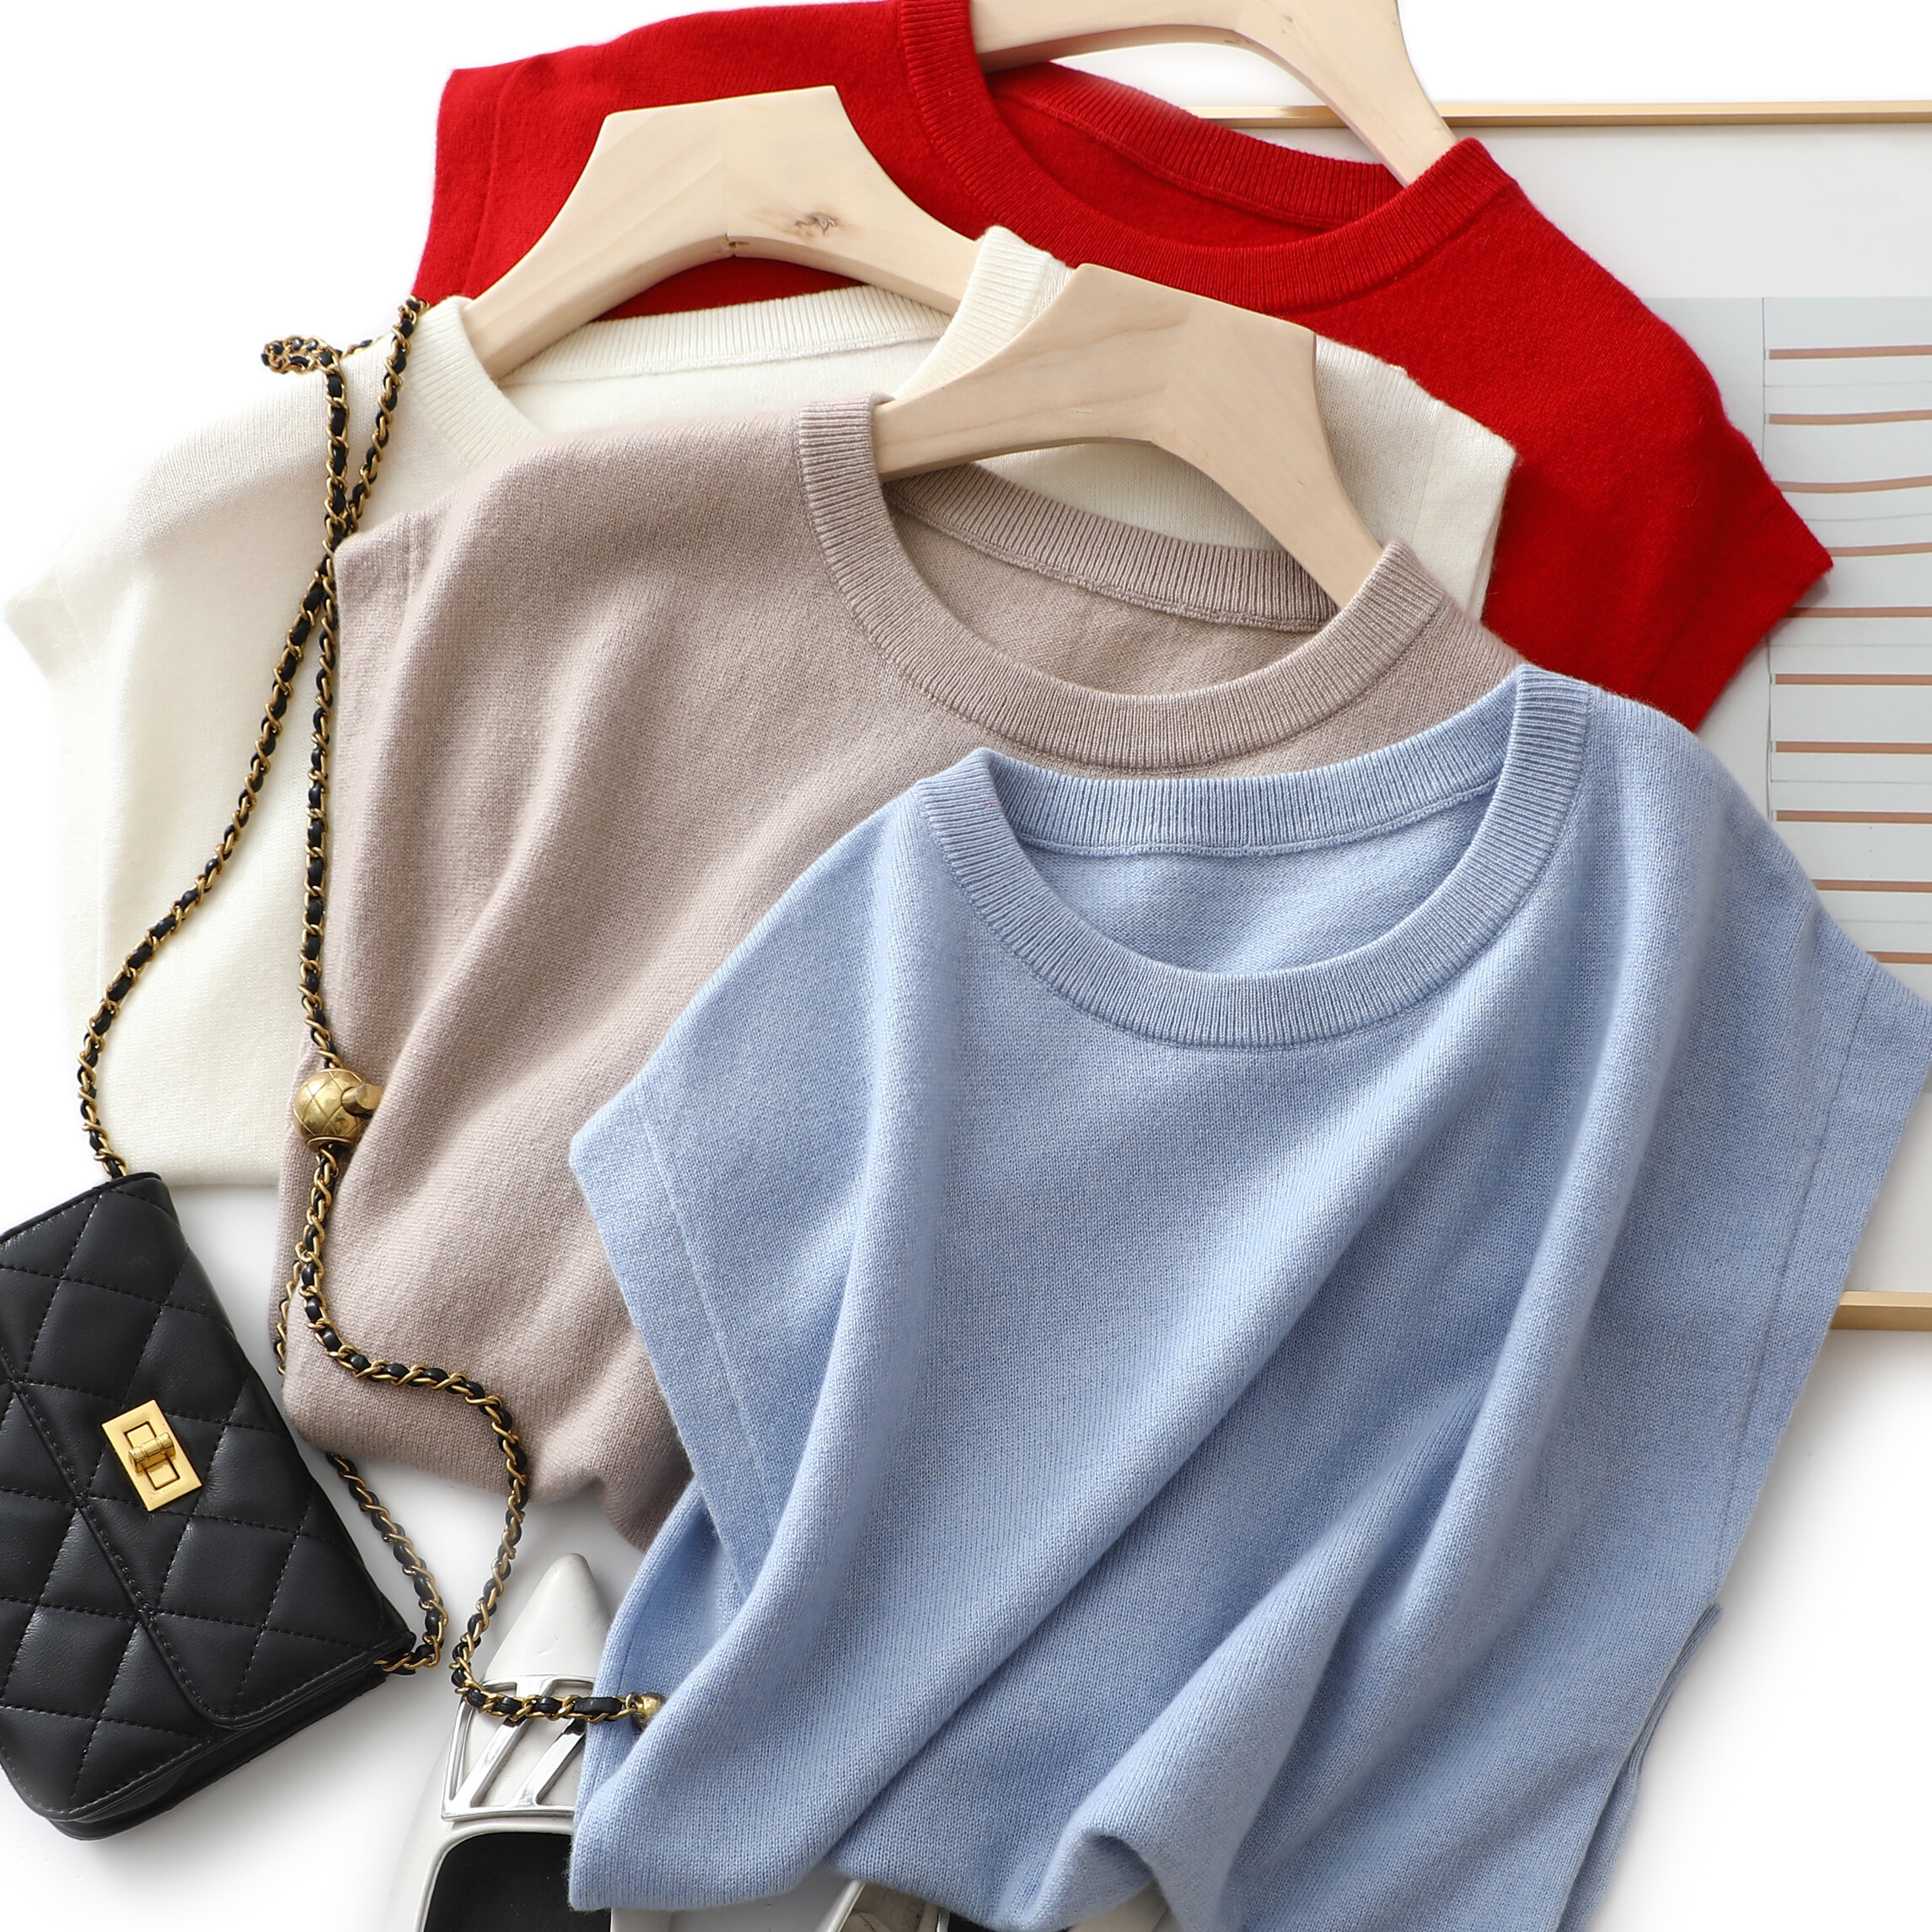 Nanteng New Stock 12GG Monochrome Round Neck Sleeveless Women Knit Vest 100% Cashmere Sweater